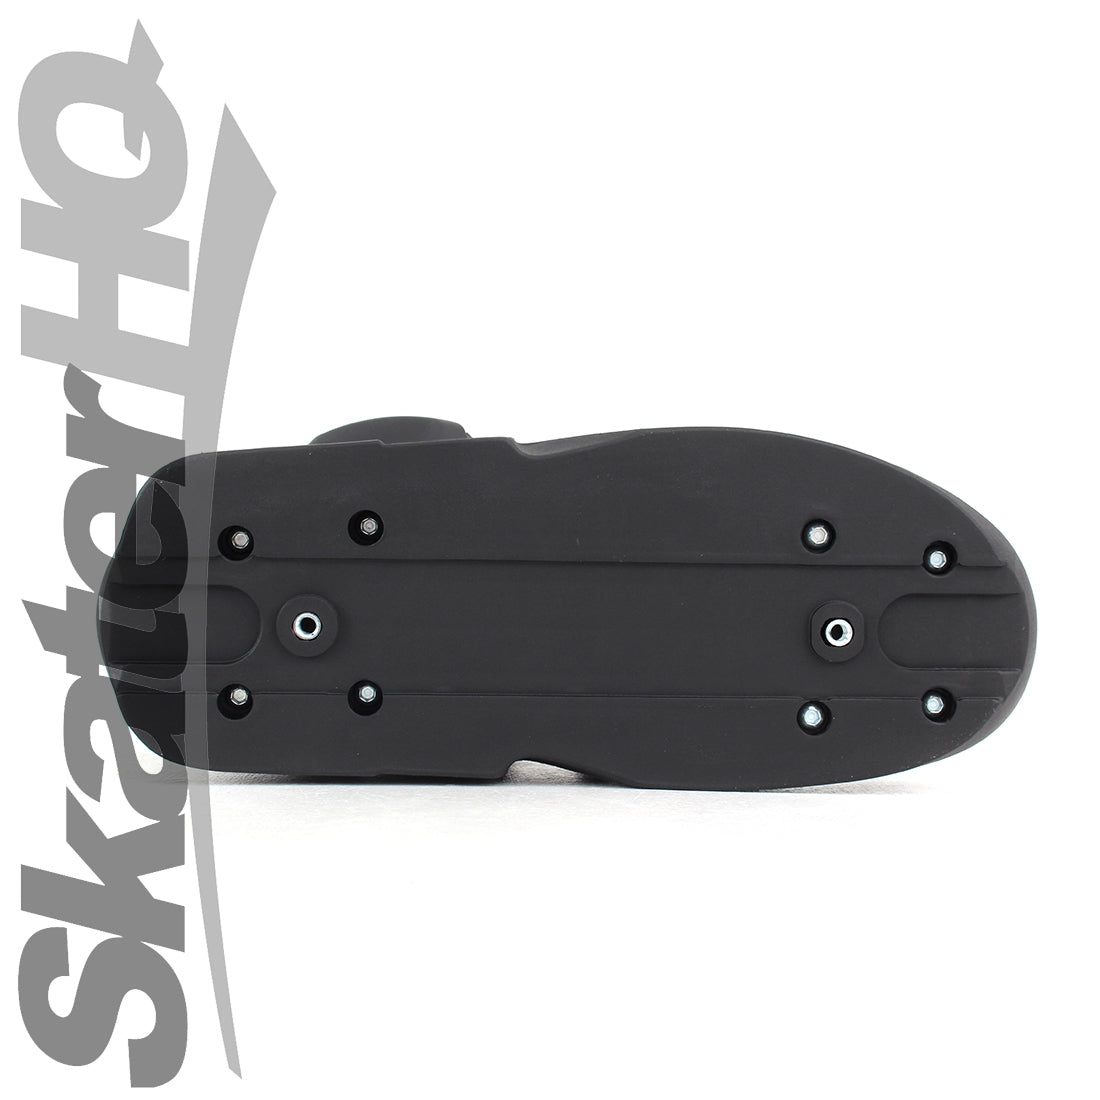 THEM 909 Boot Black 5-6US Inline Aggressive Skates